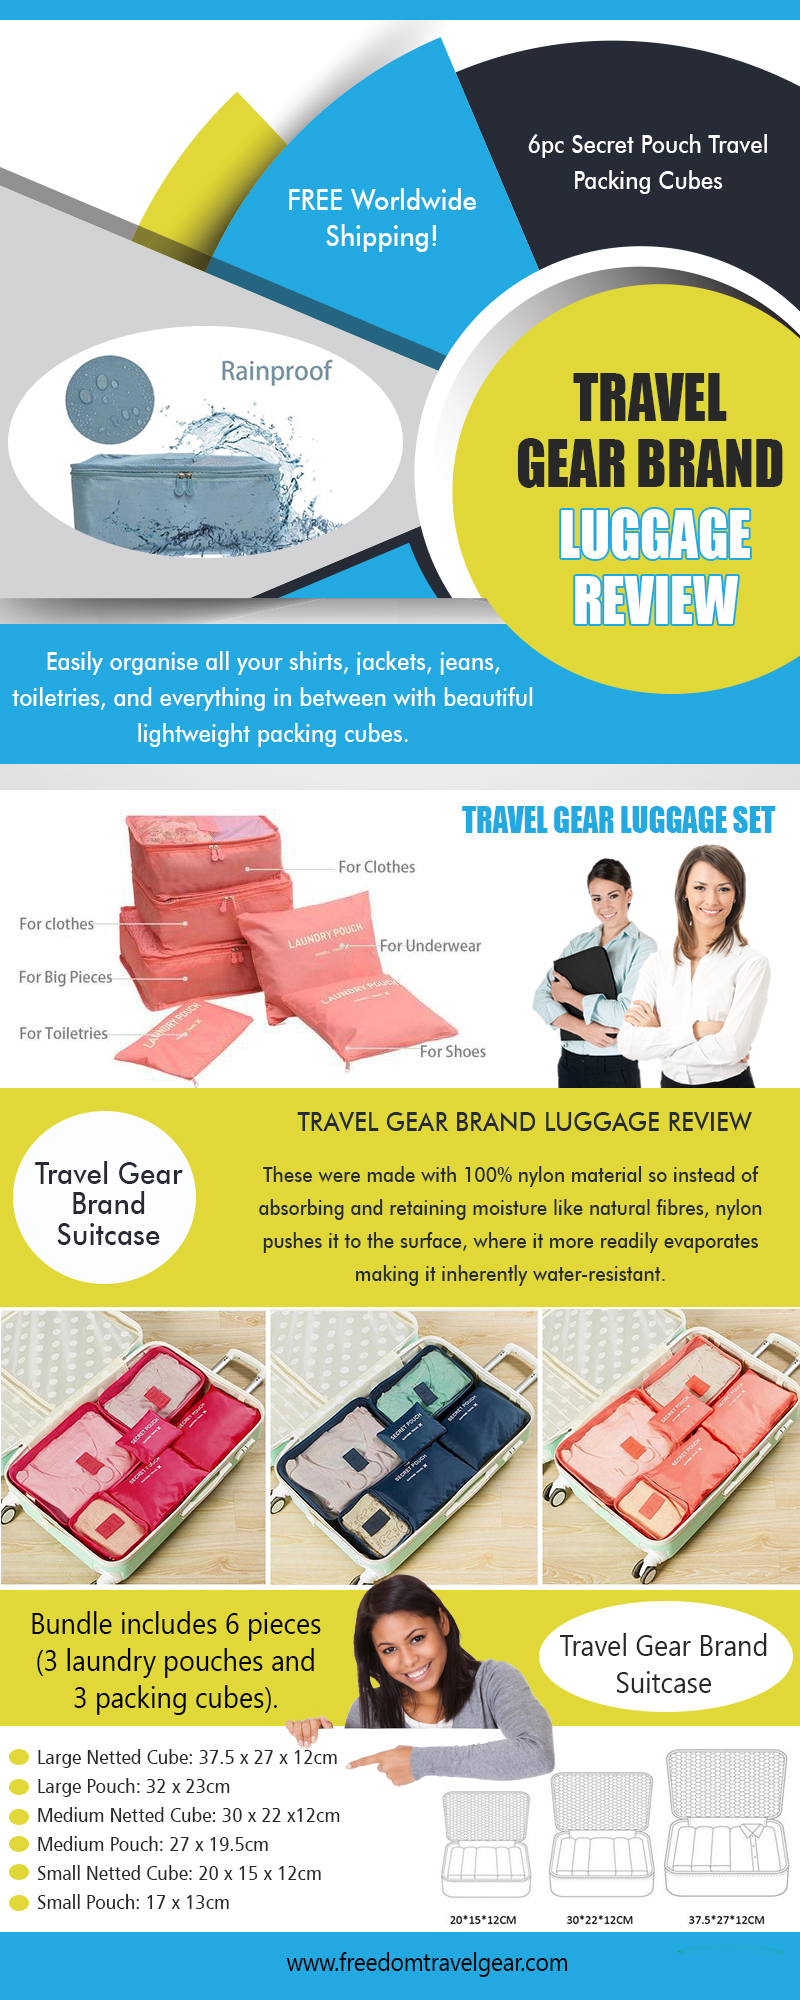 Travel Gear Brand Suitcase